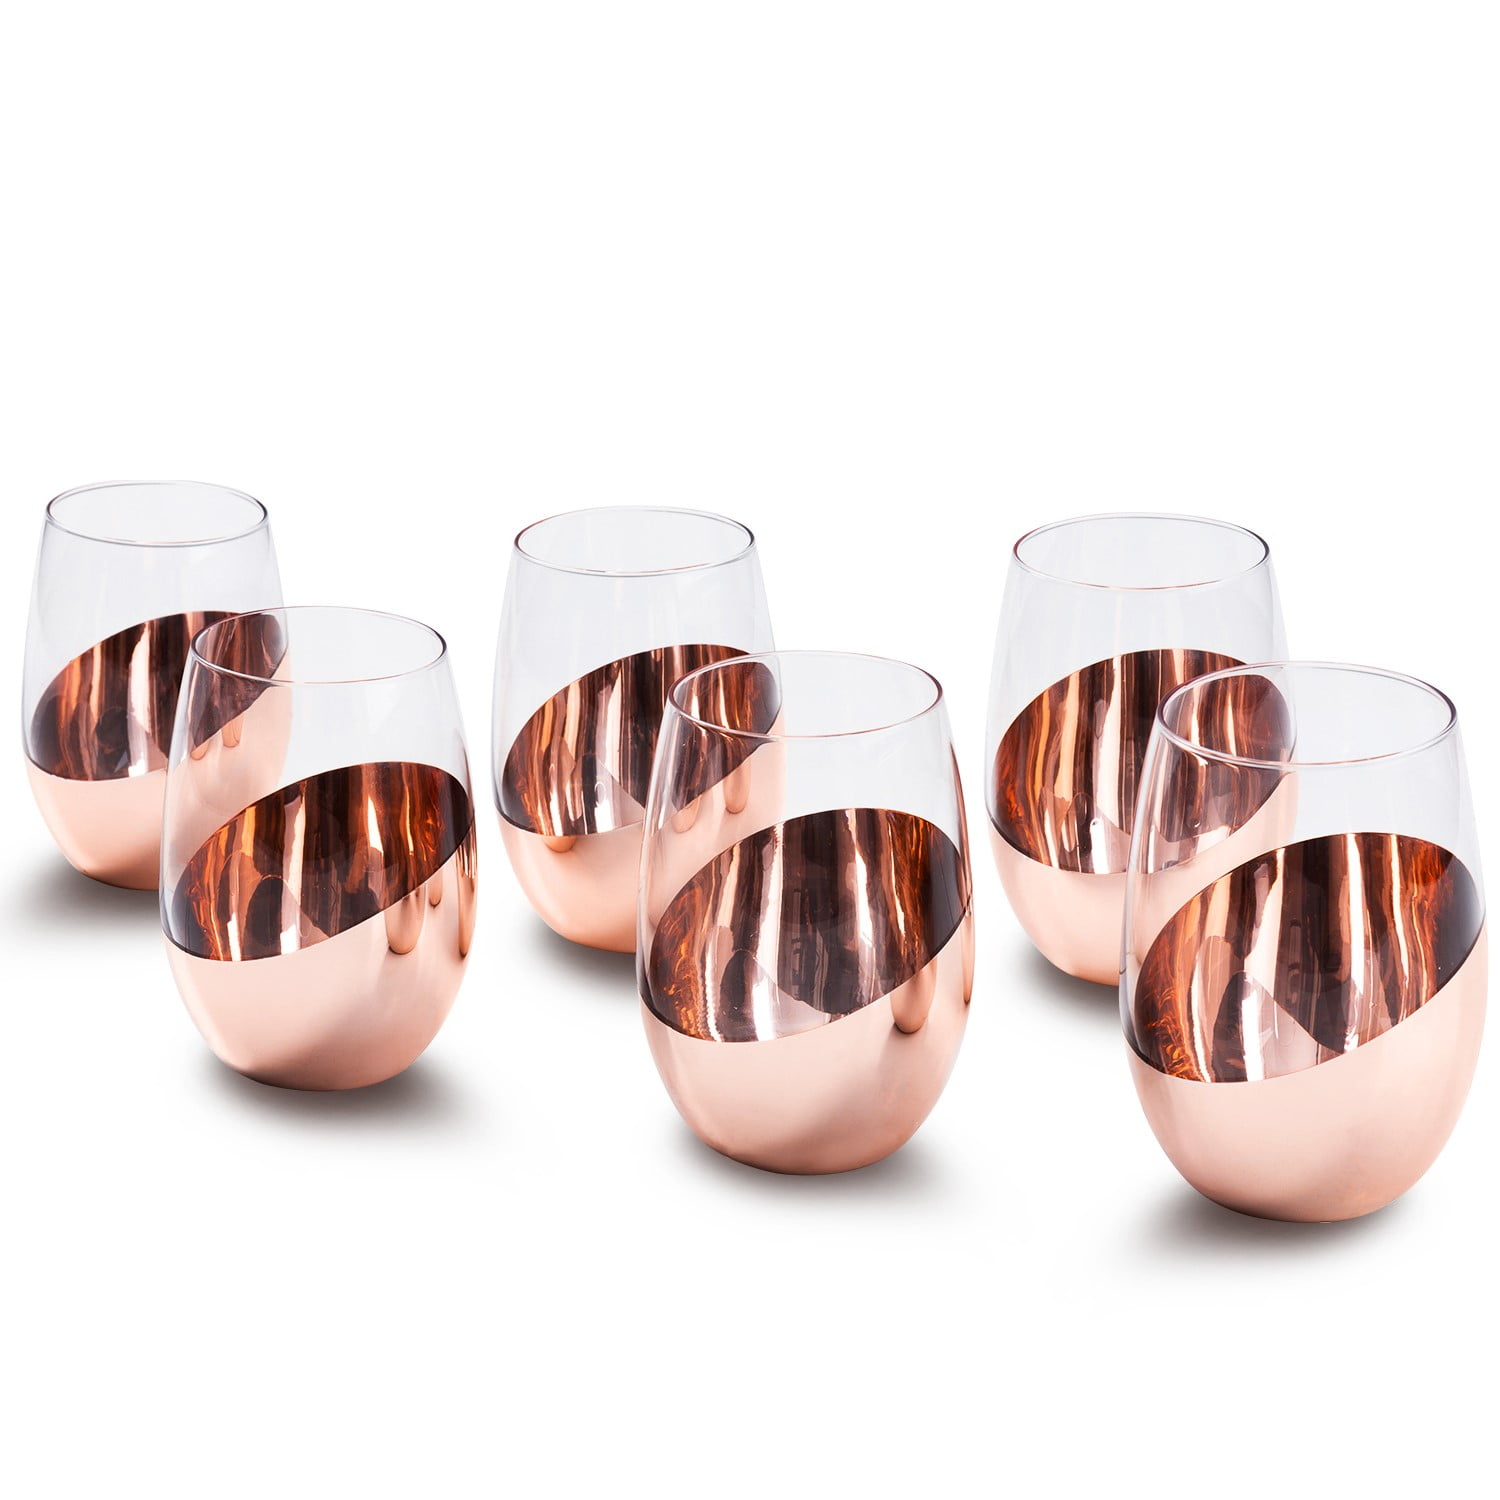 Large 17oz Stemless Copper Wine Glasses, Set of 6